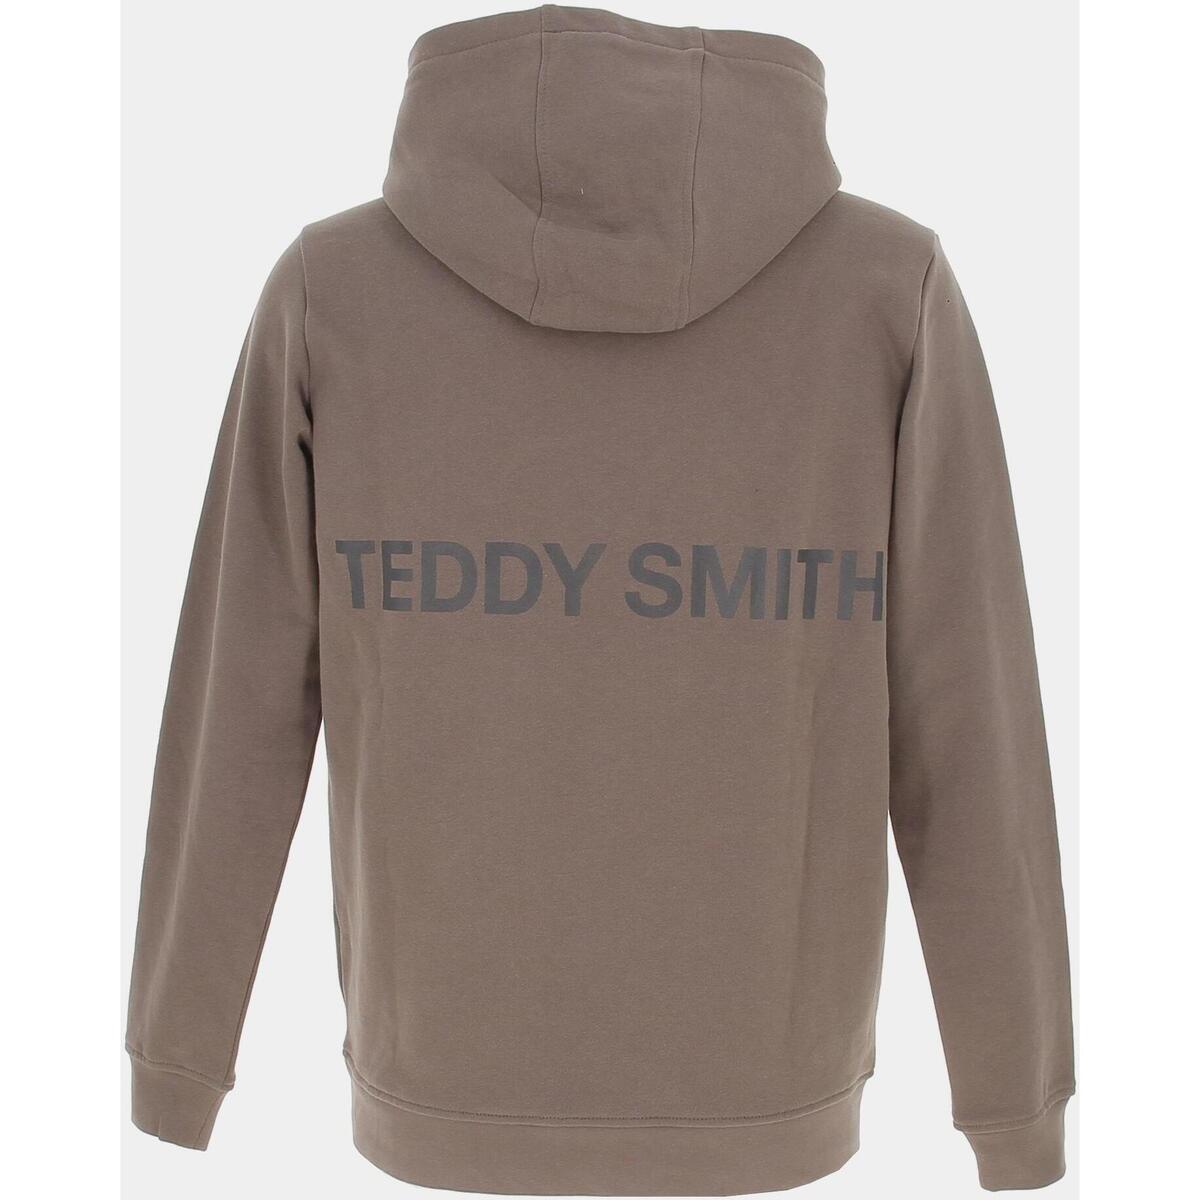 Teddy Smith Marron S-required hood iWf6D1zT